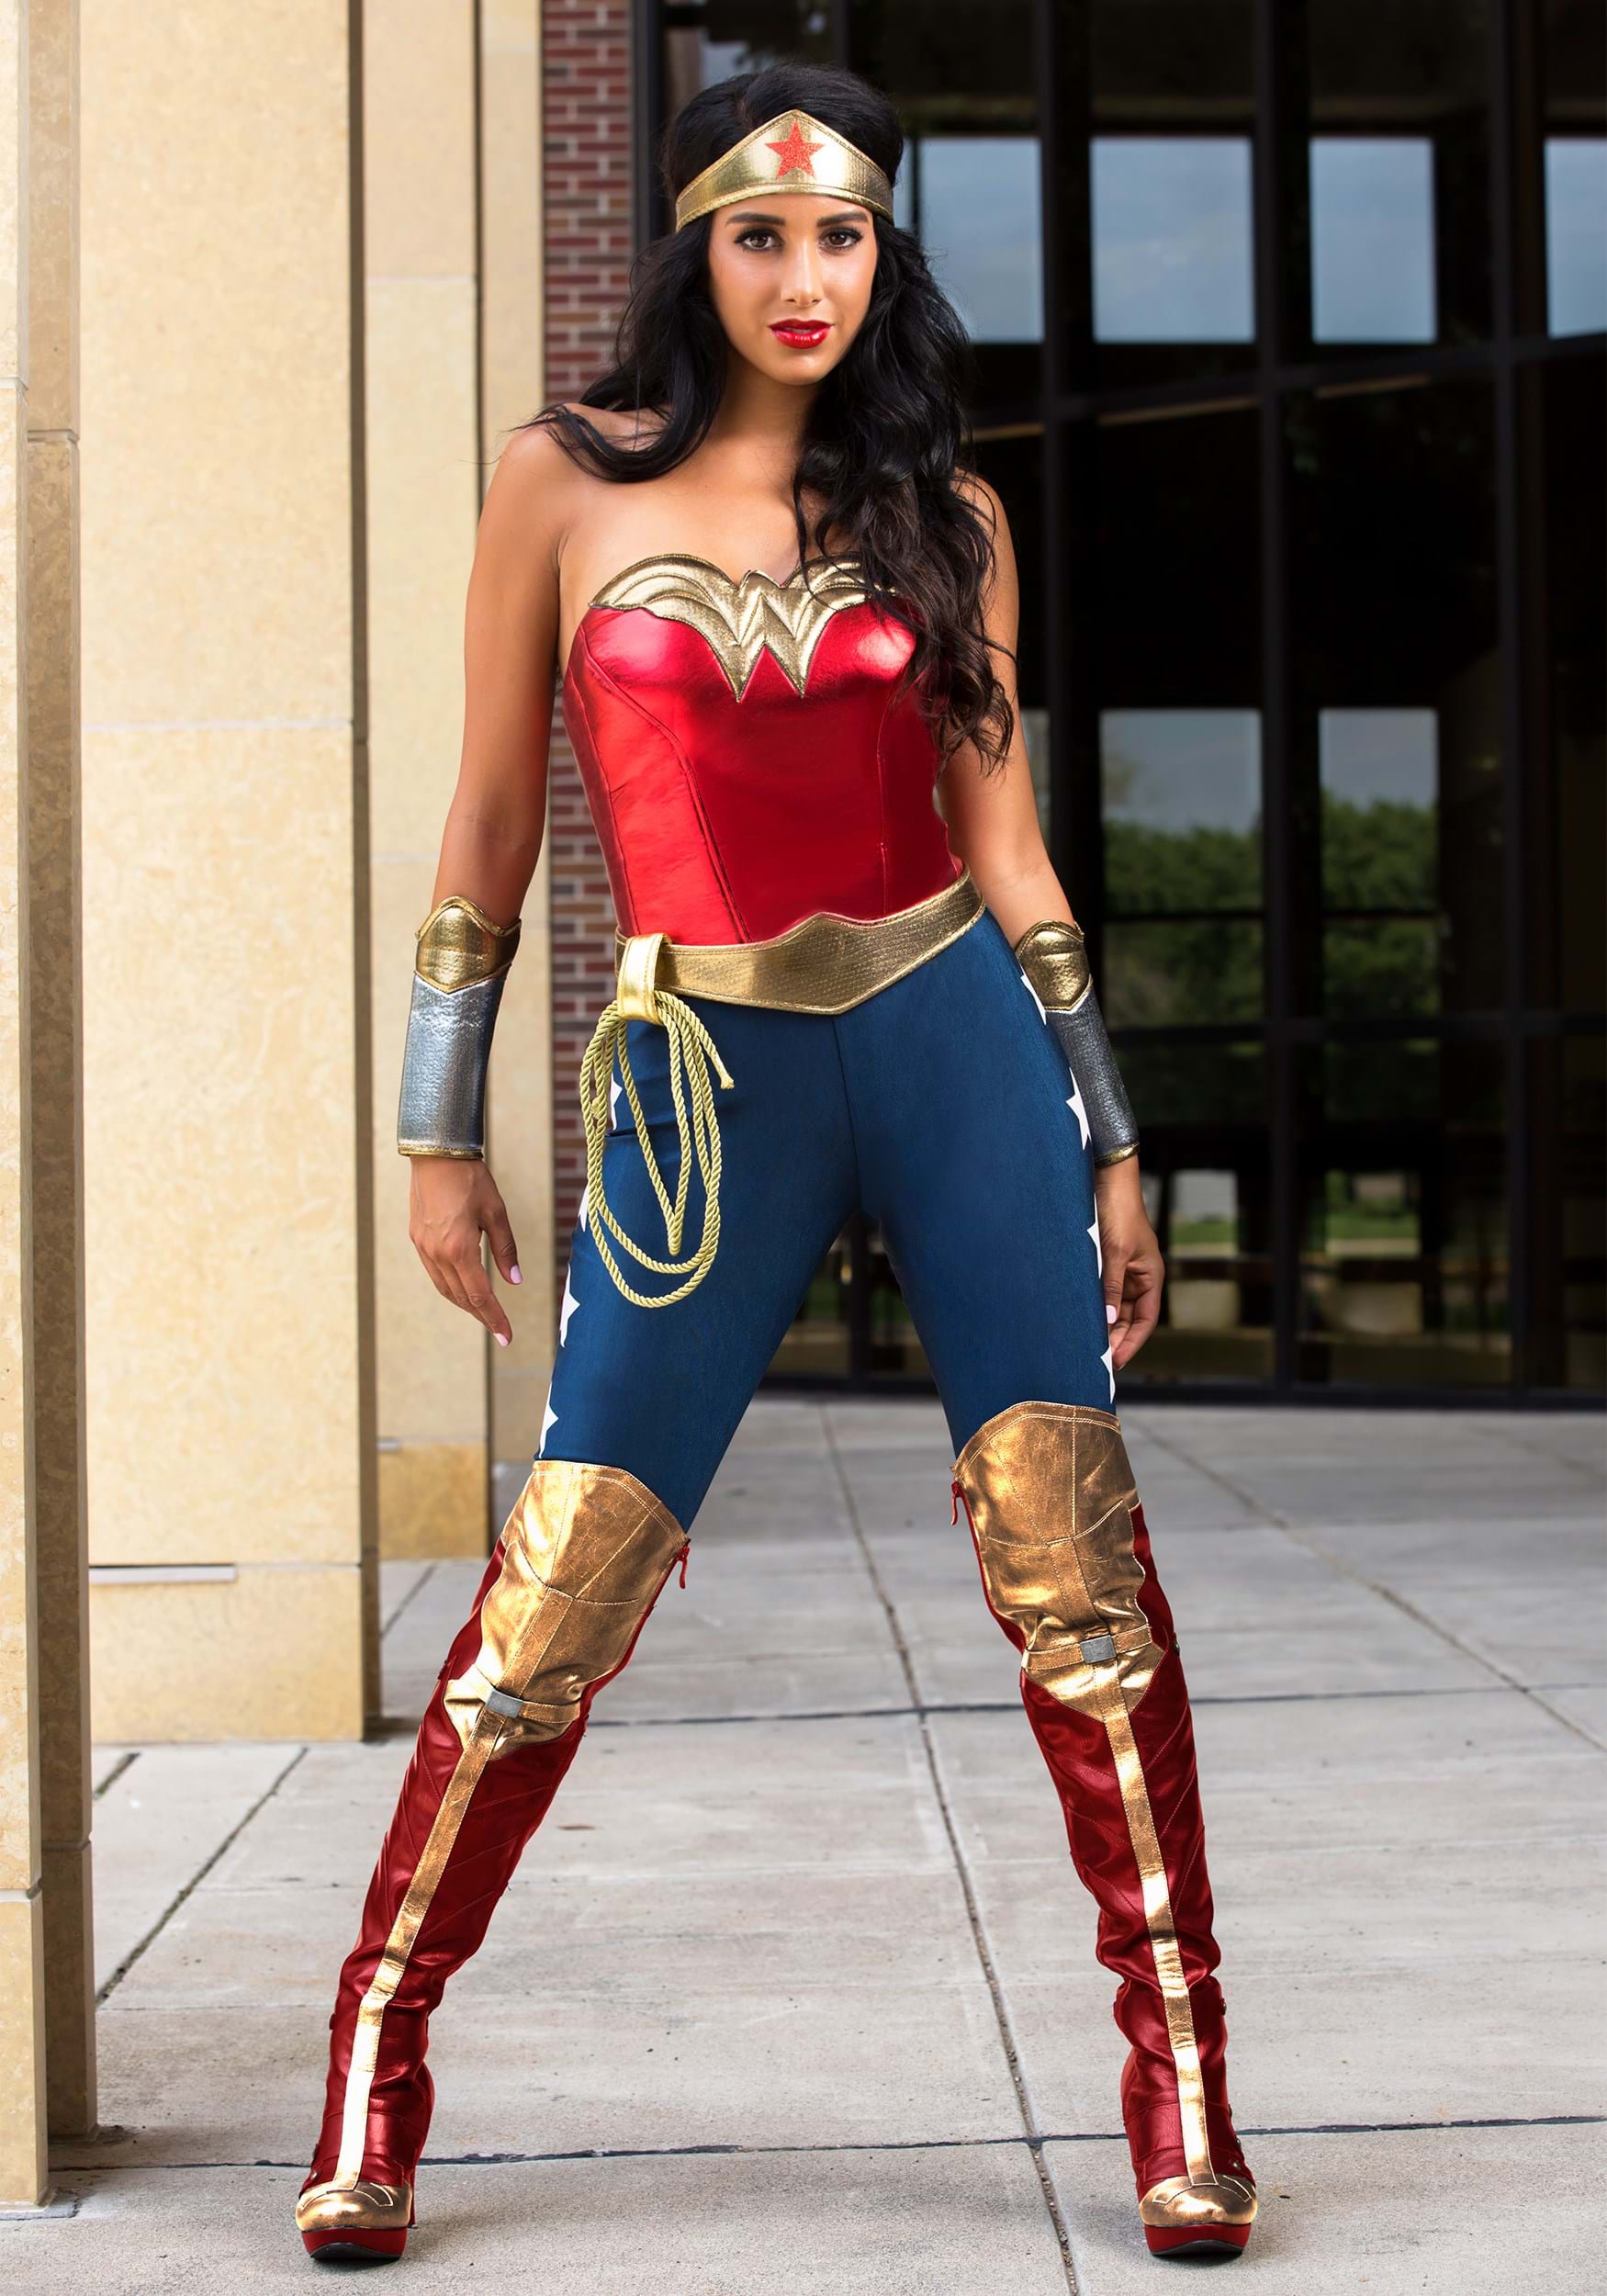 Dc Wonder Woman Adult Costume 6097